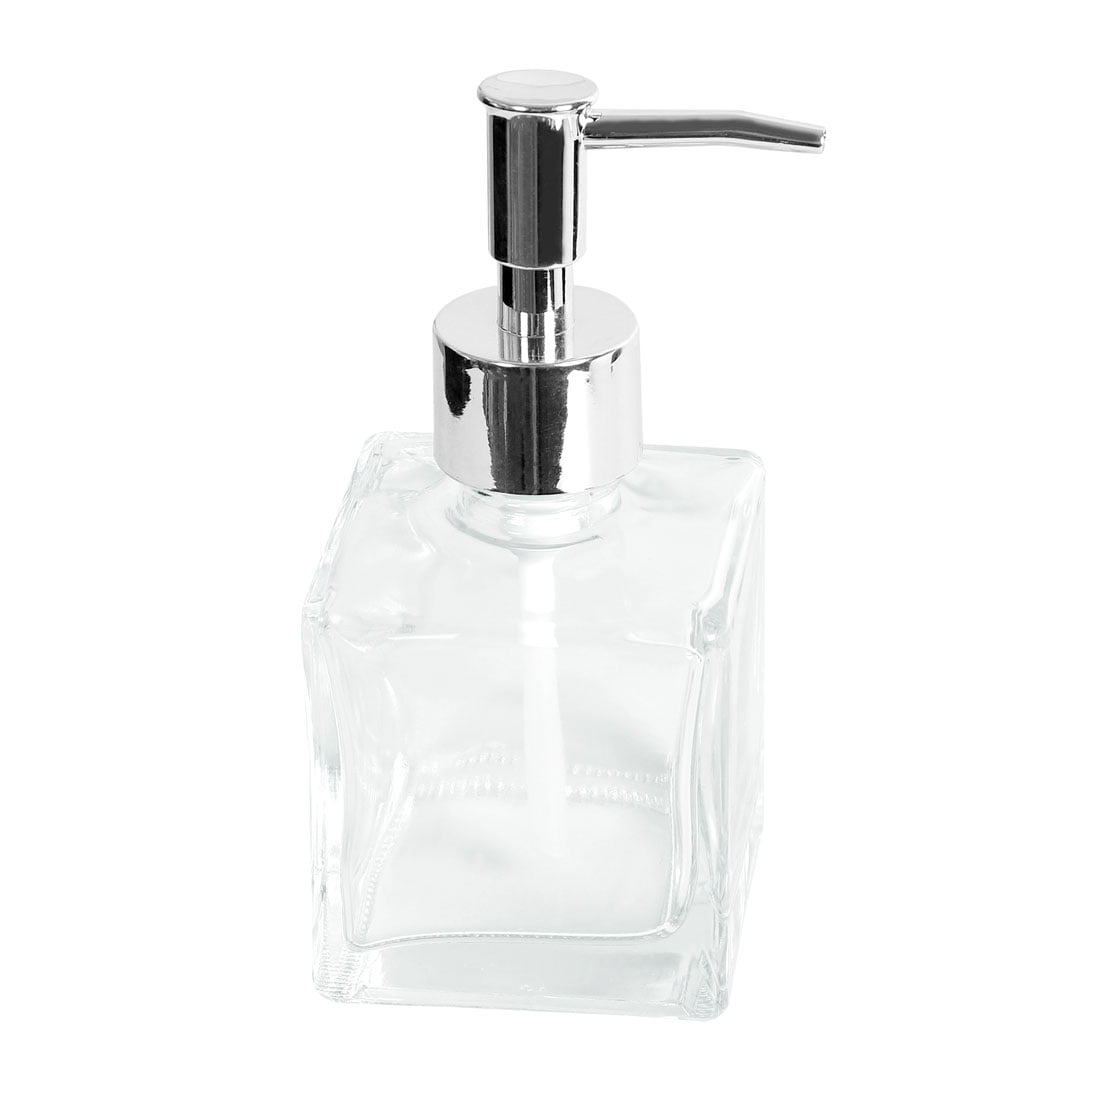 Refillable Glass Liquid Soap Dispenser Bottle with